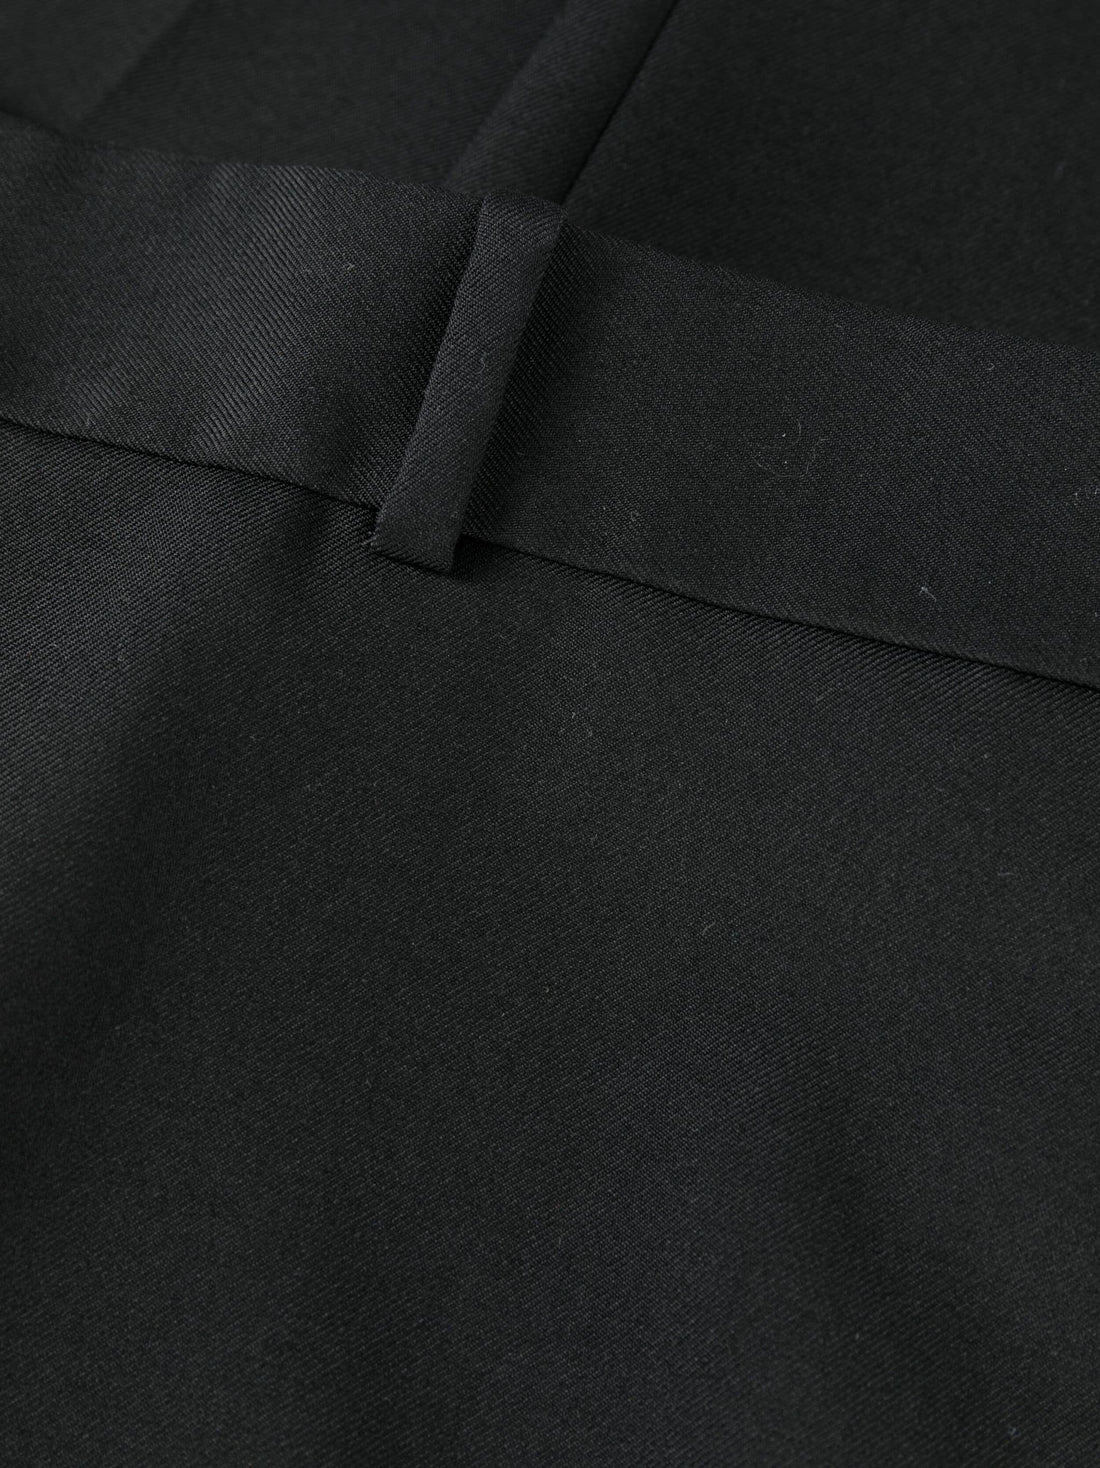 ALEXANDER MCQUEEN Mid-Rise Wool Tailored Trousers Black - MAISONDEFASHION.COM